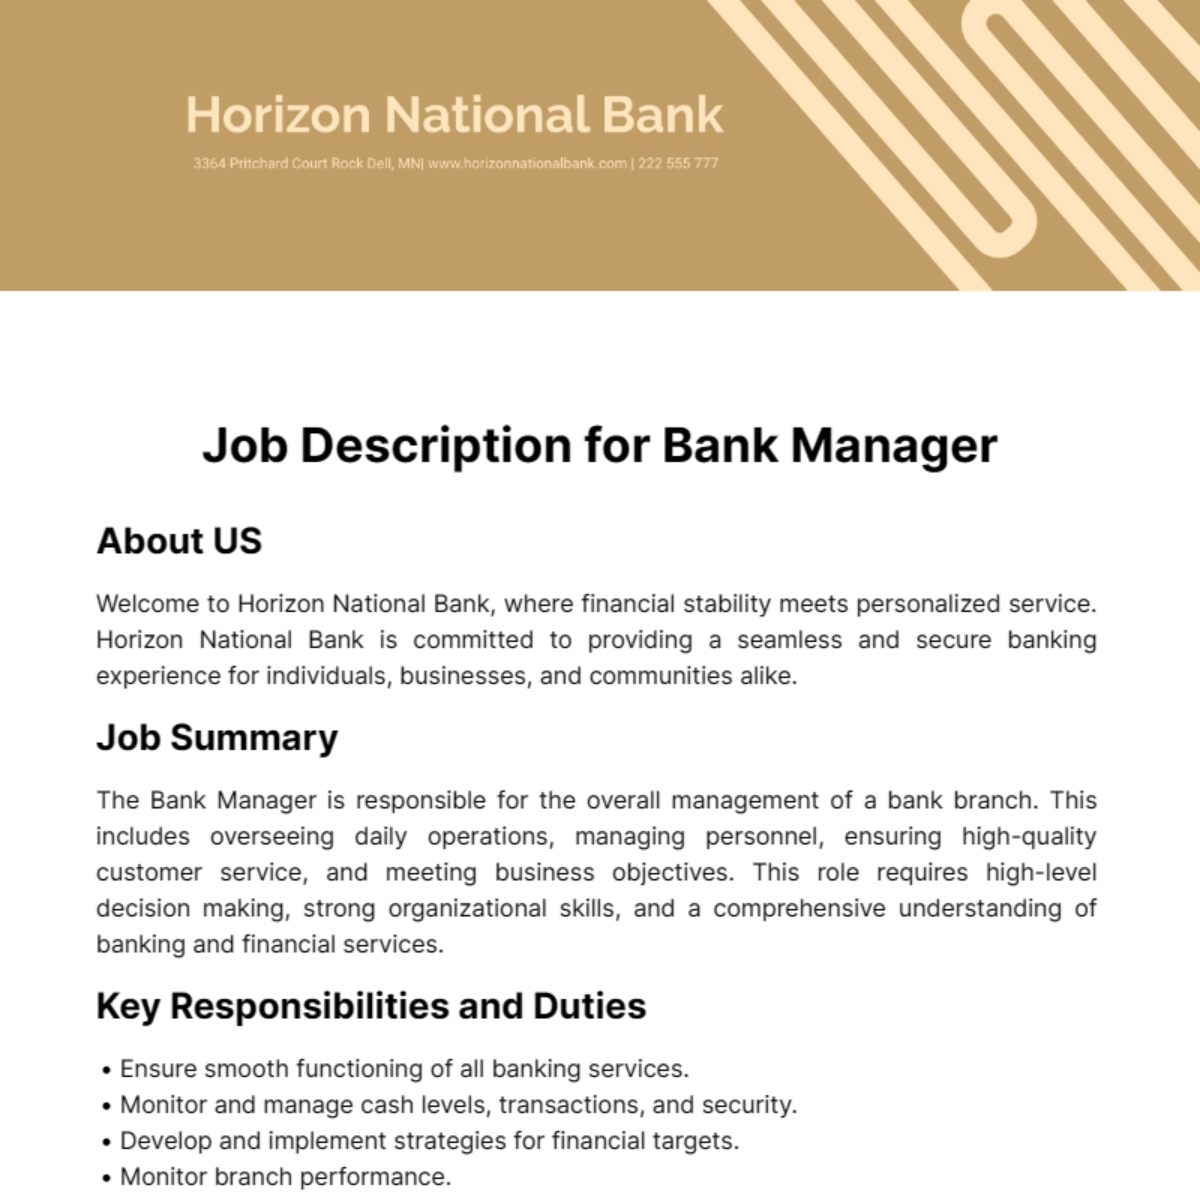 Job Description for Bank Manager Template